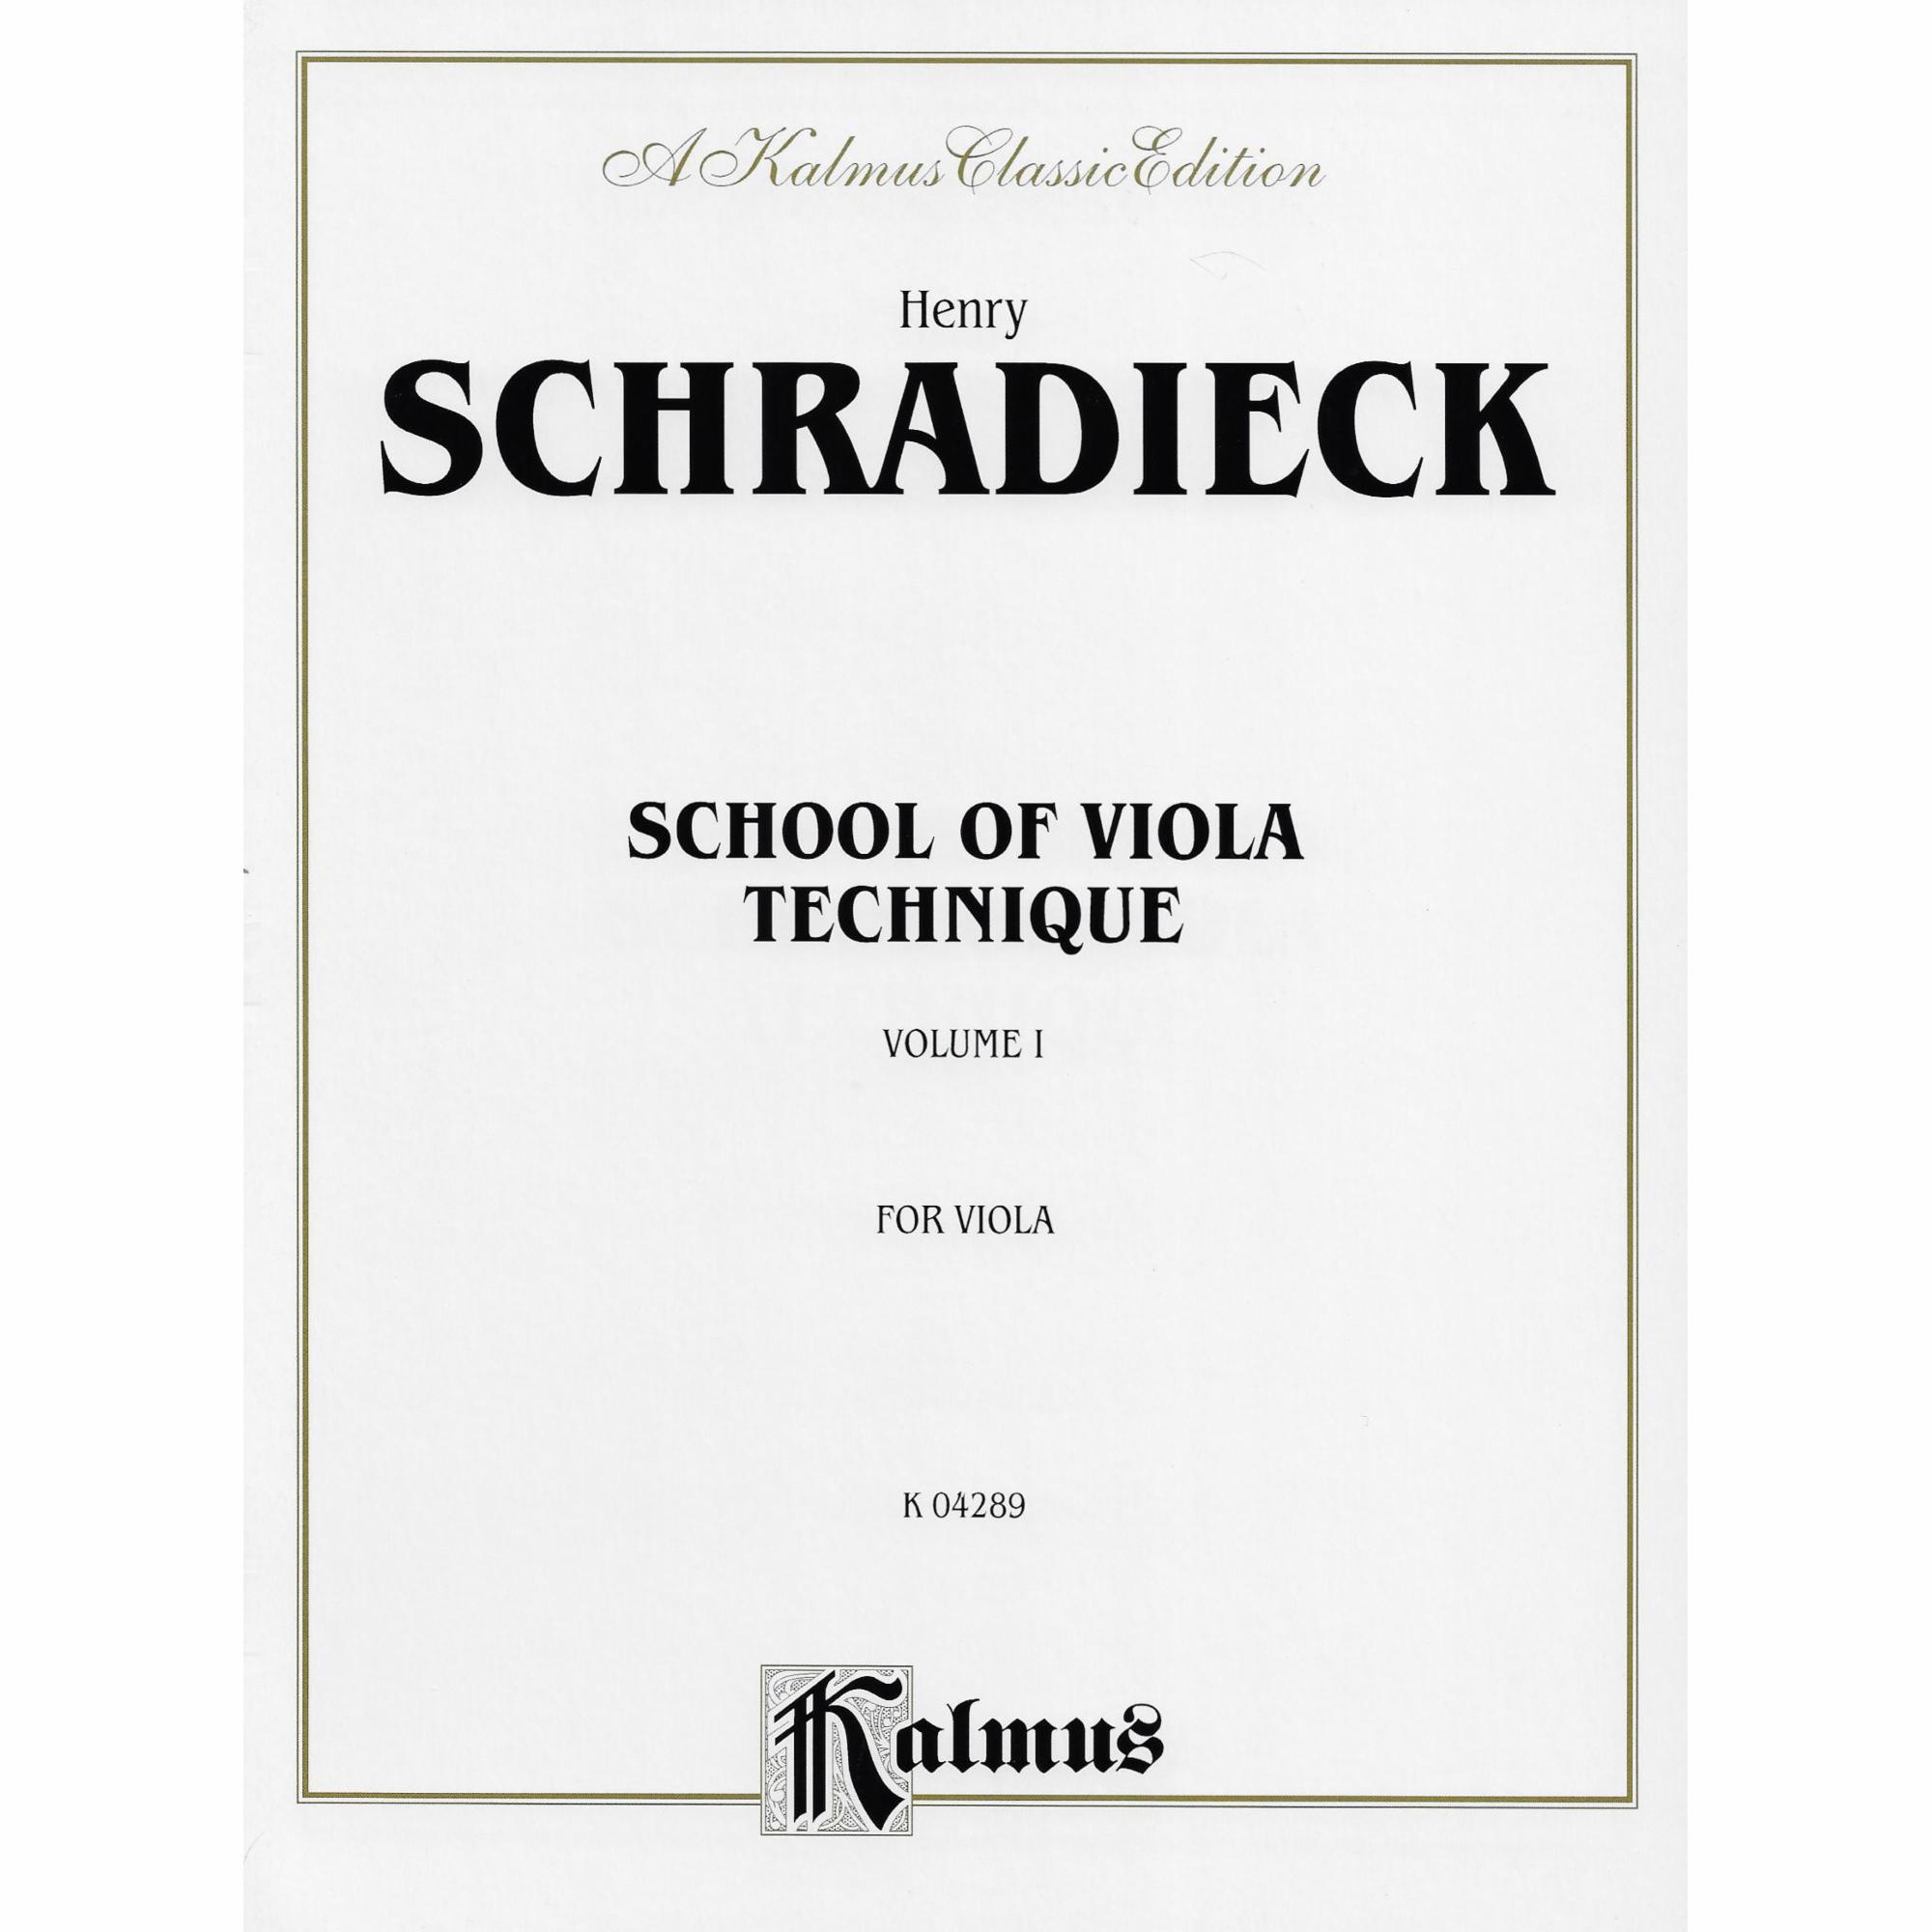 Schradieck -- School of Viola Technique, Volume I